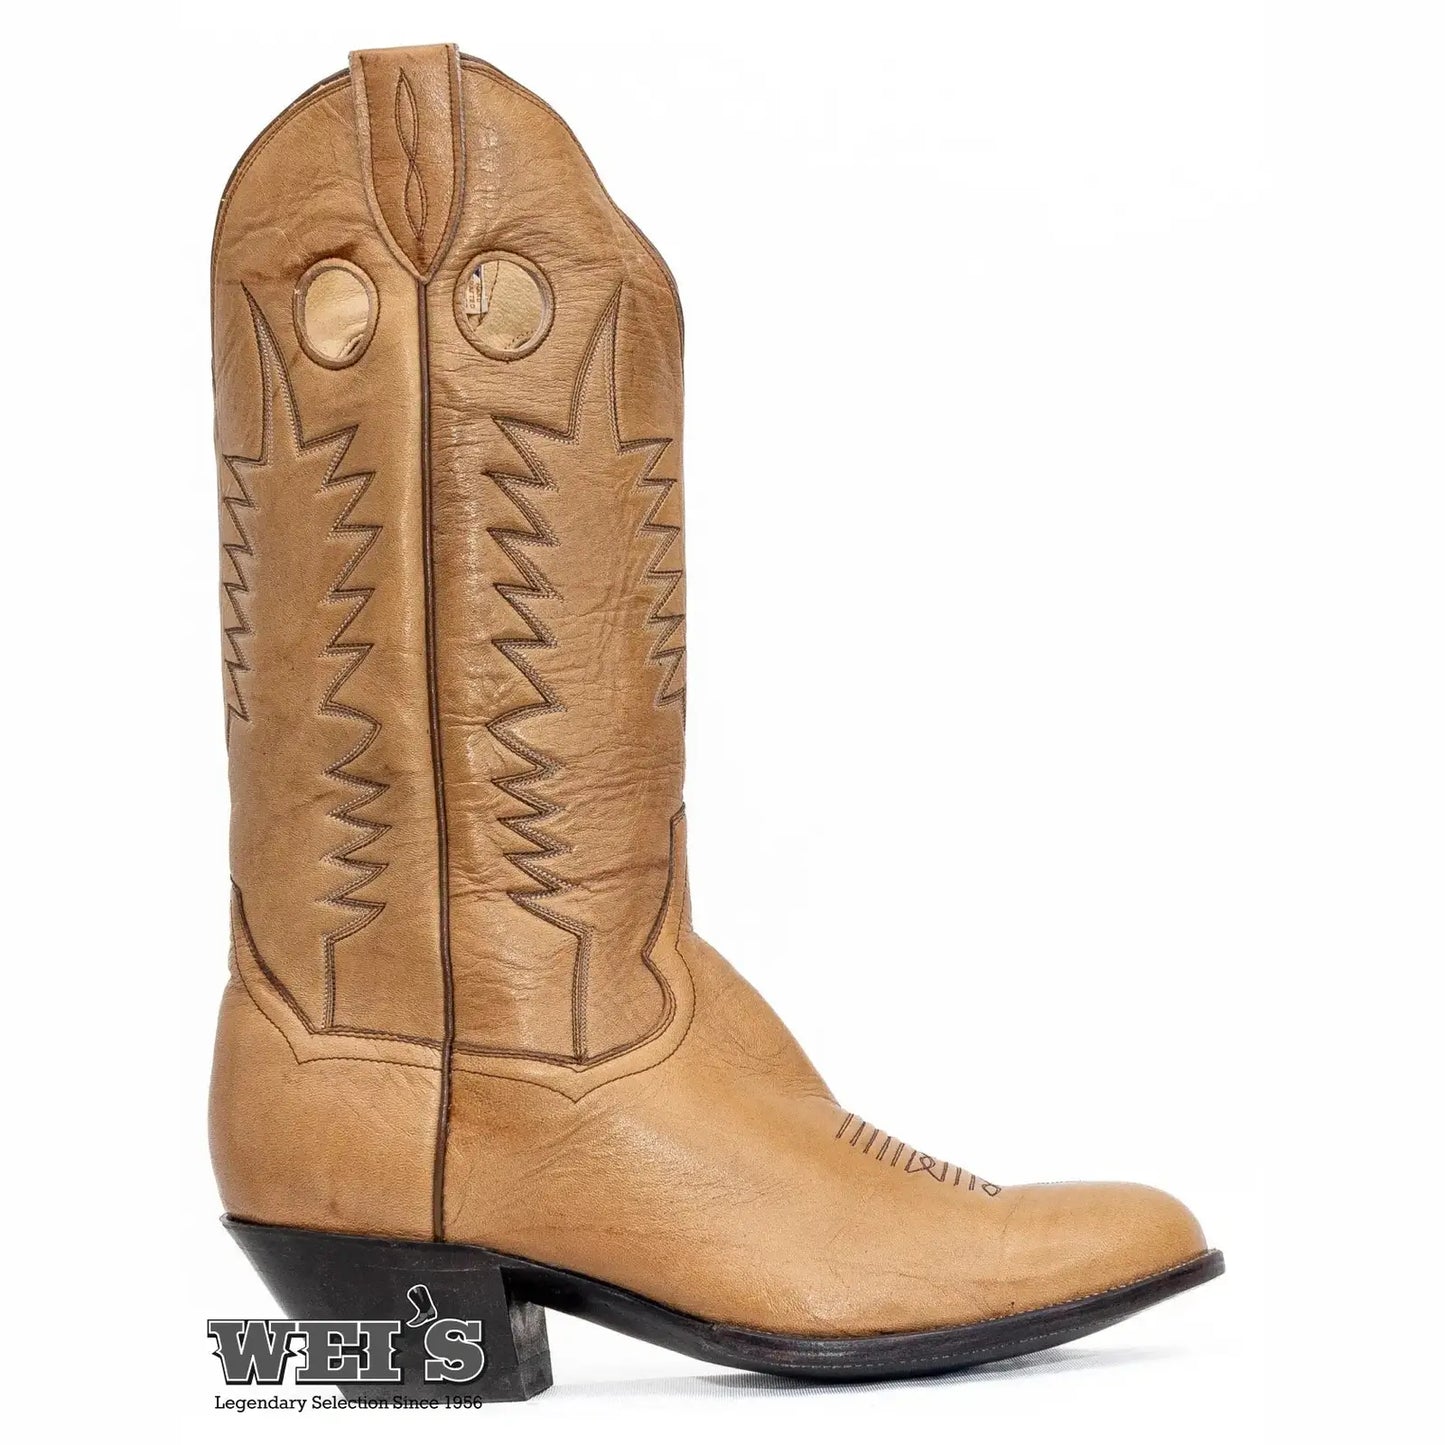 Panhandle Slim Men's Cowboy Boots 13" Cowhide R-toe 22009